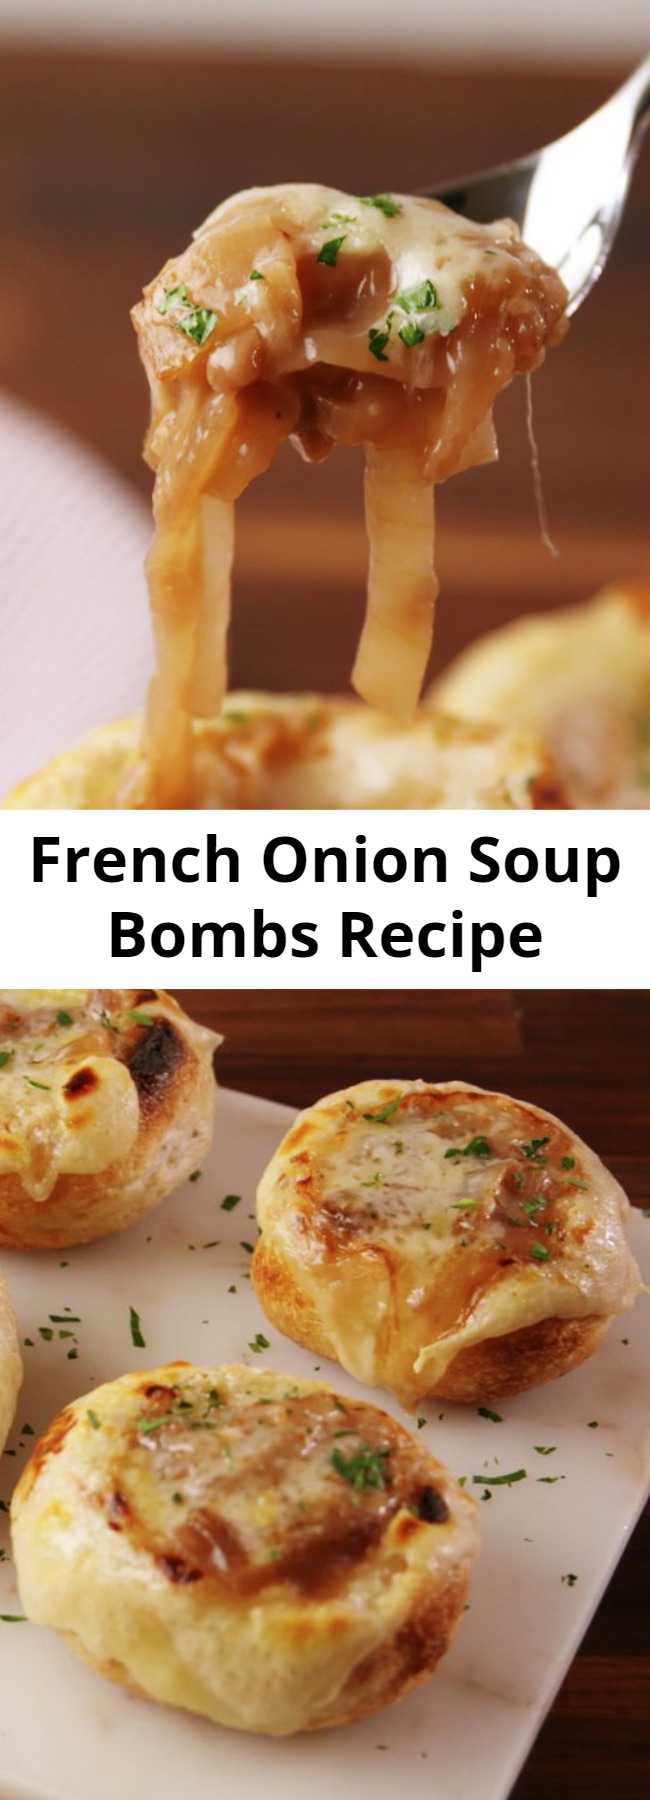 French Onion Soup Bombs Recipe - Mini bread bowls are SO CUTE. #easy #recipe #soup #mini #bites #bombs #frenchonion #onion #winter #appetizer